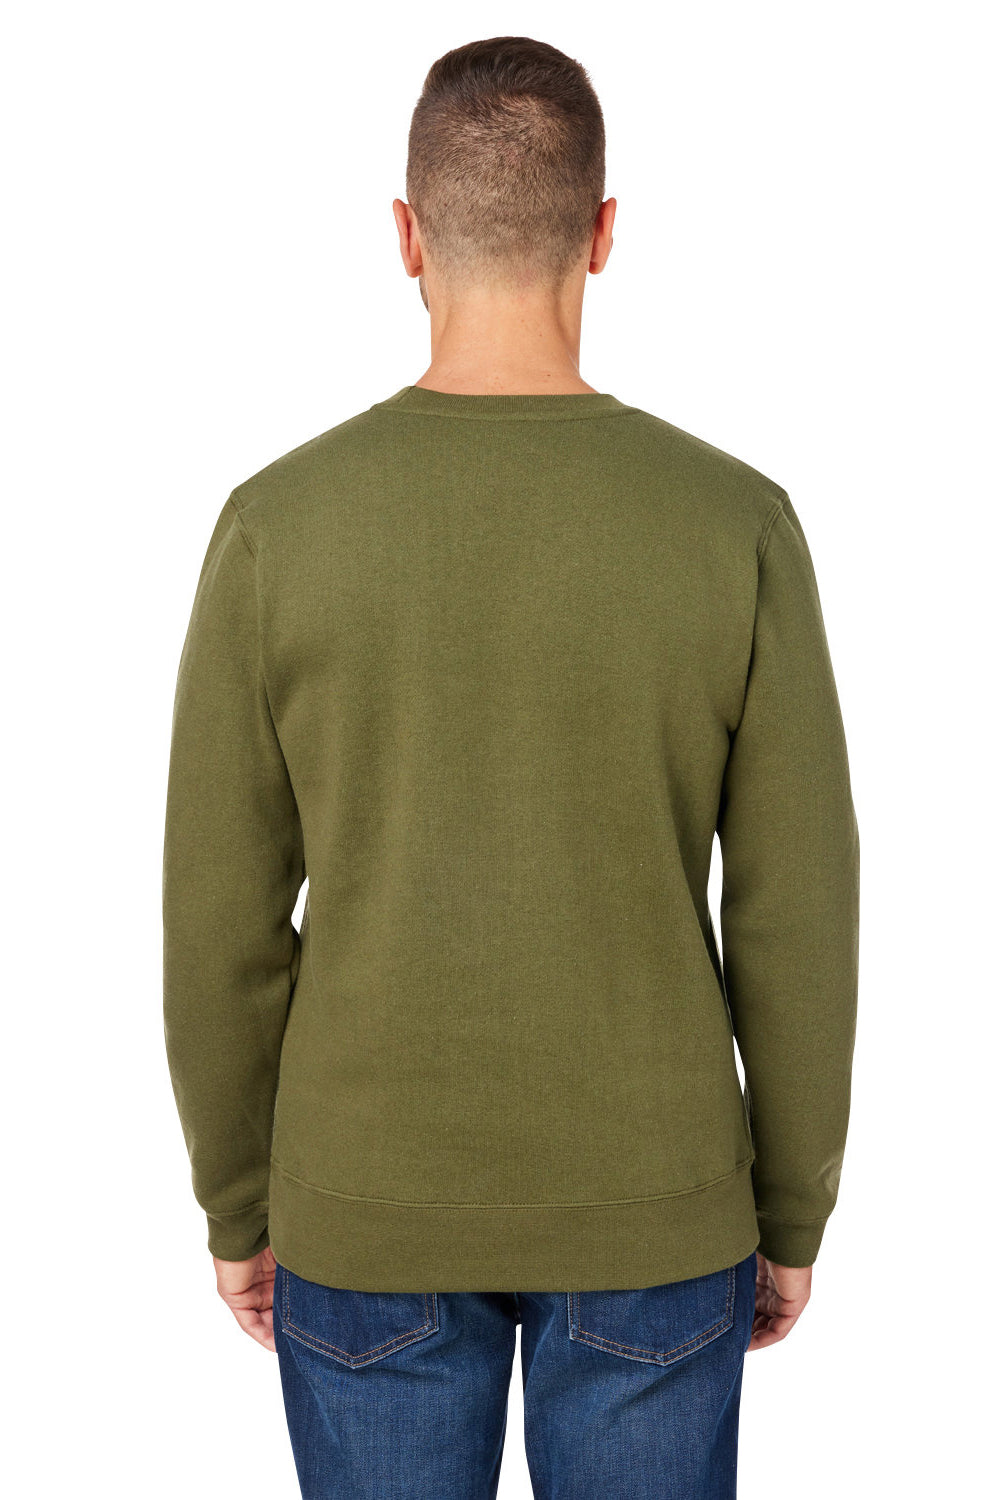 J America 8424JA Mens Premium Fleece Crewneck Sweatshirt Military Green Back